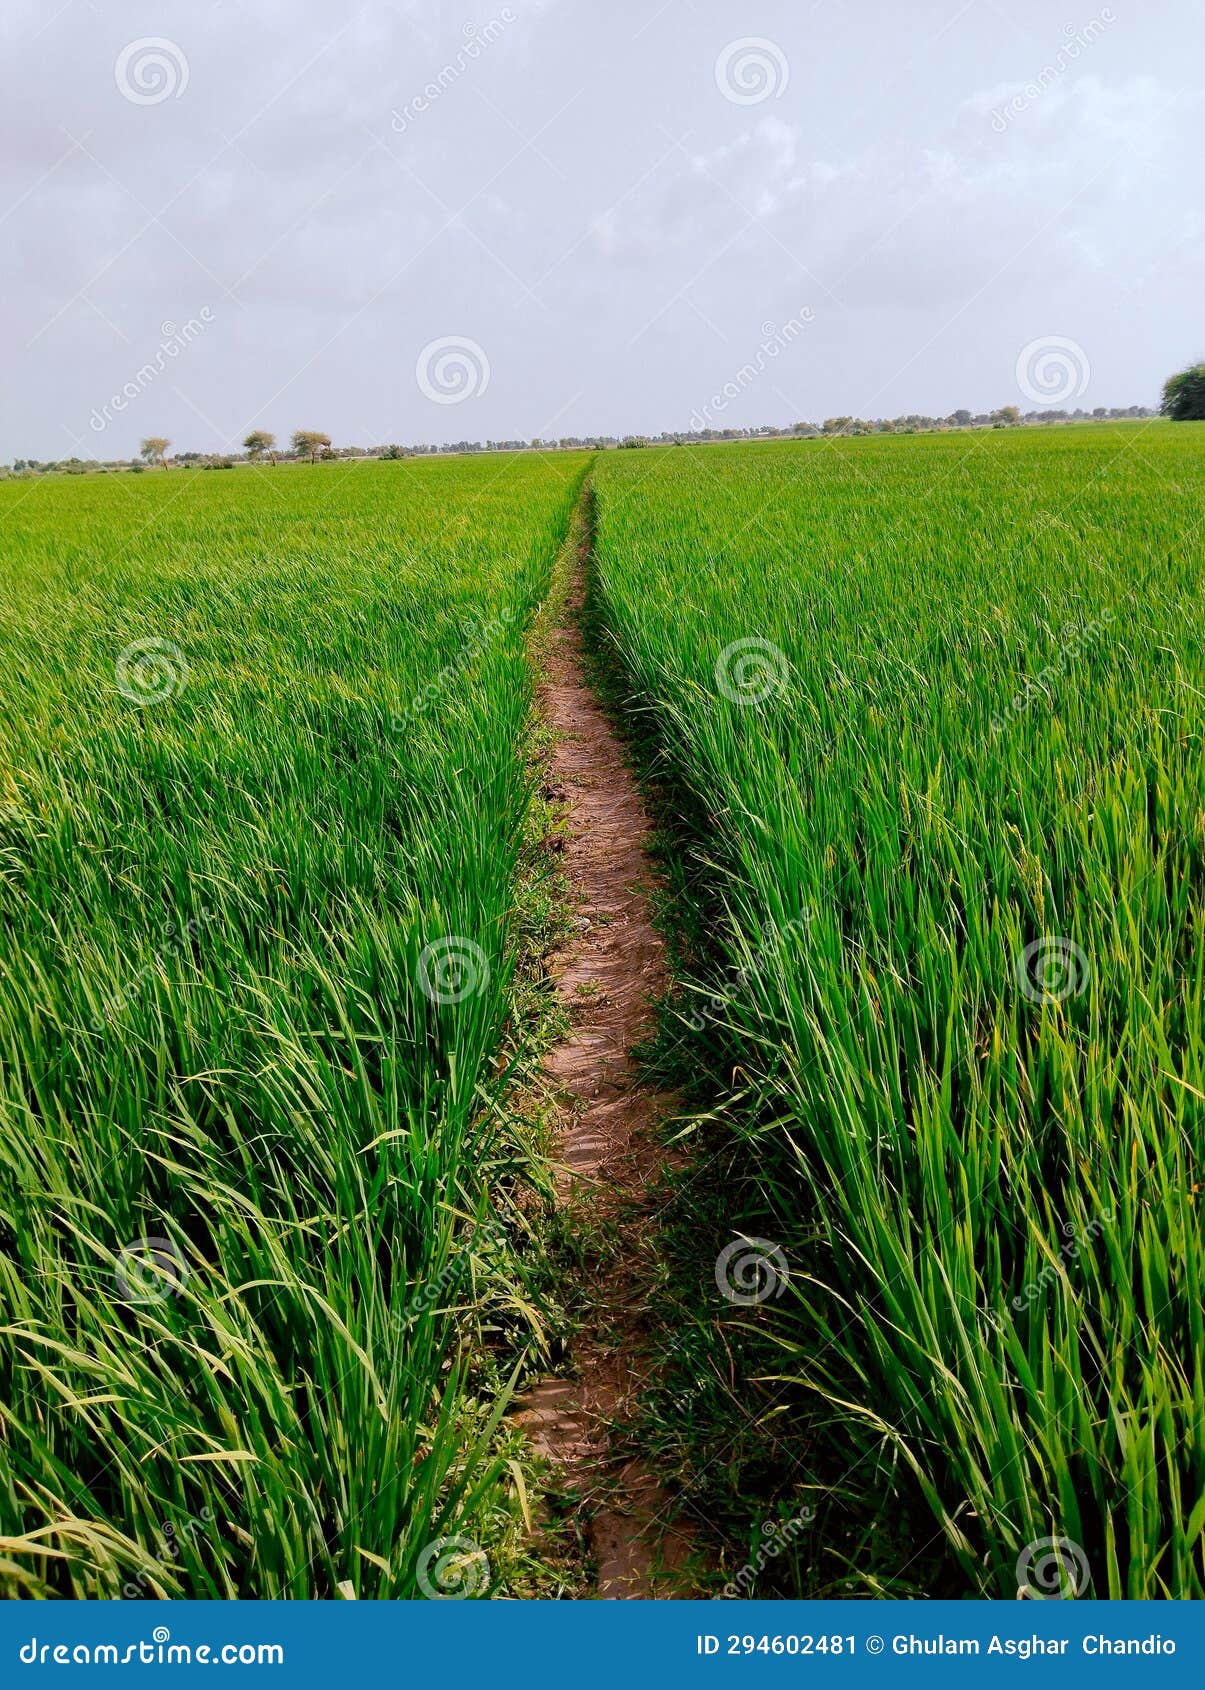 rice crop farm field green paddy dhan plantation chawalfield agriculture recolte riz colheita-arroz cultivo  arroz image photo